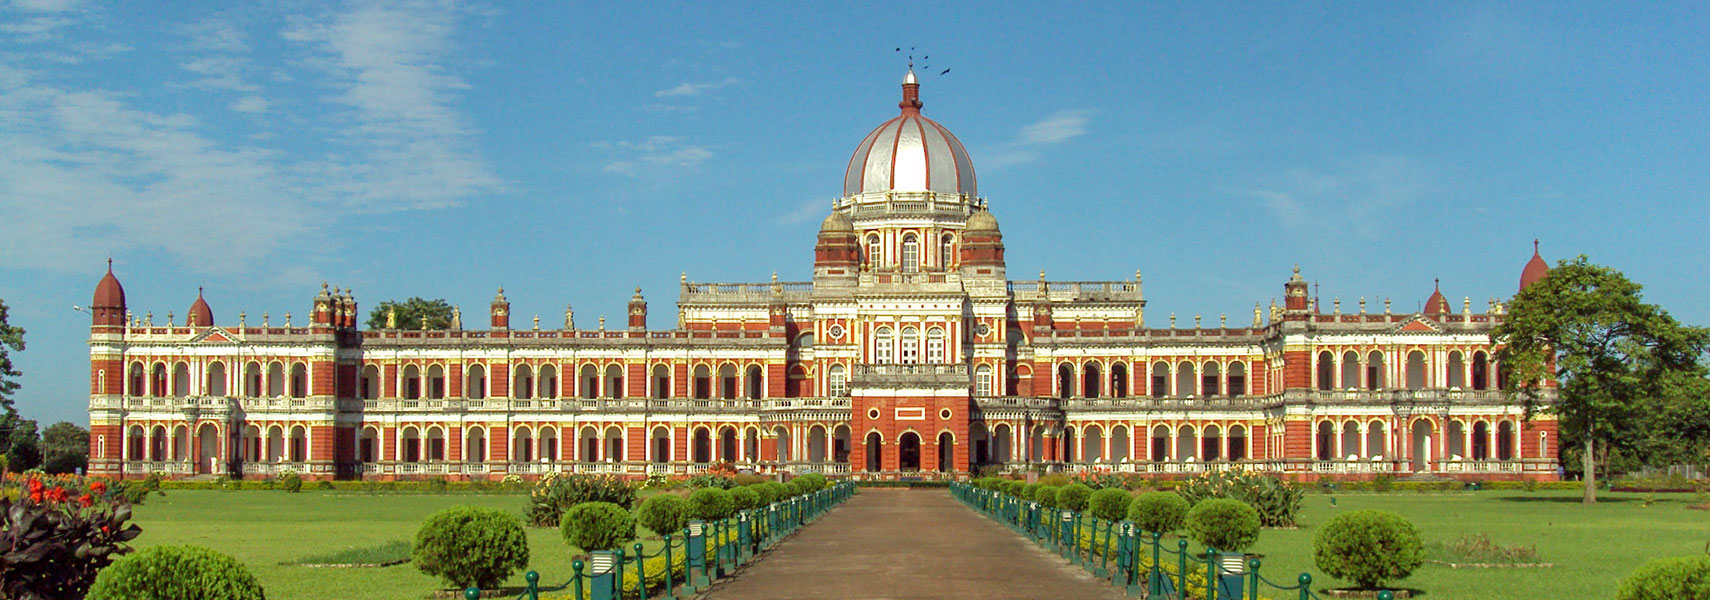 Cooch Behar Palace in Cooch Behar, West Bengal, India